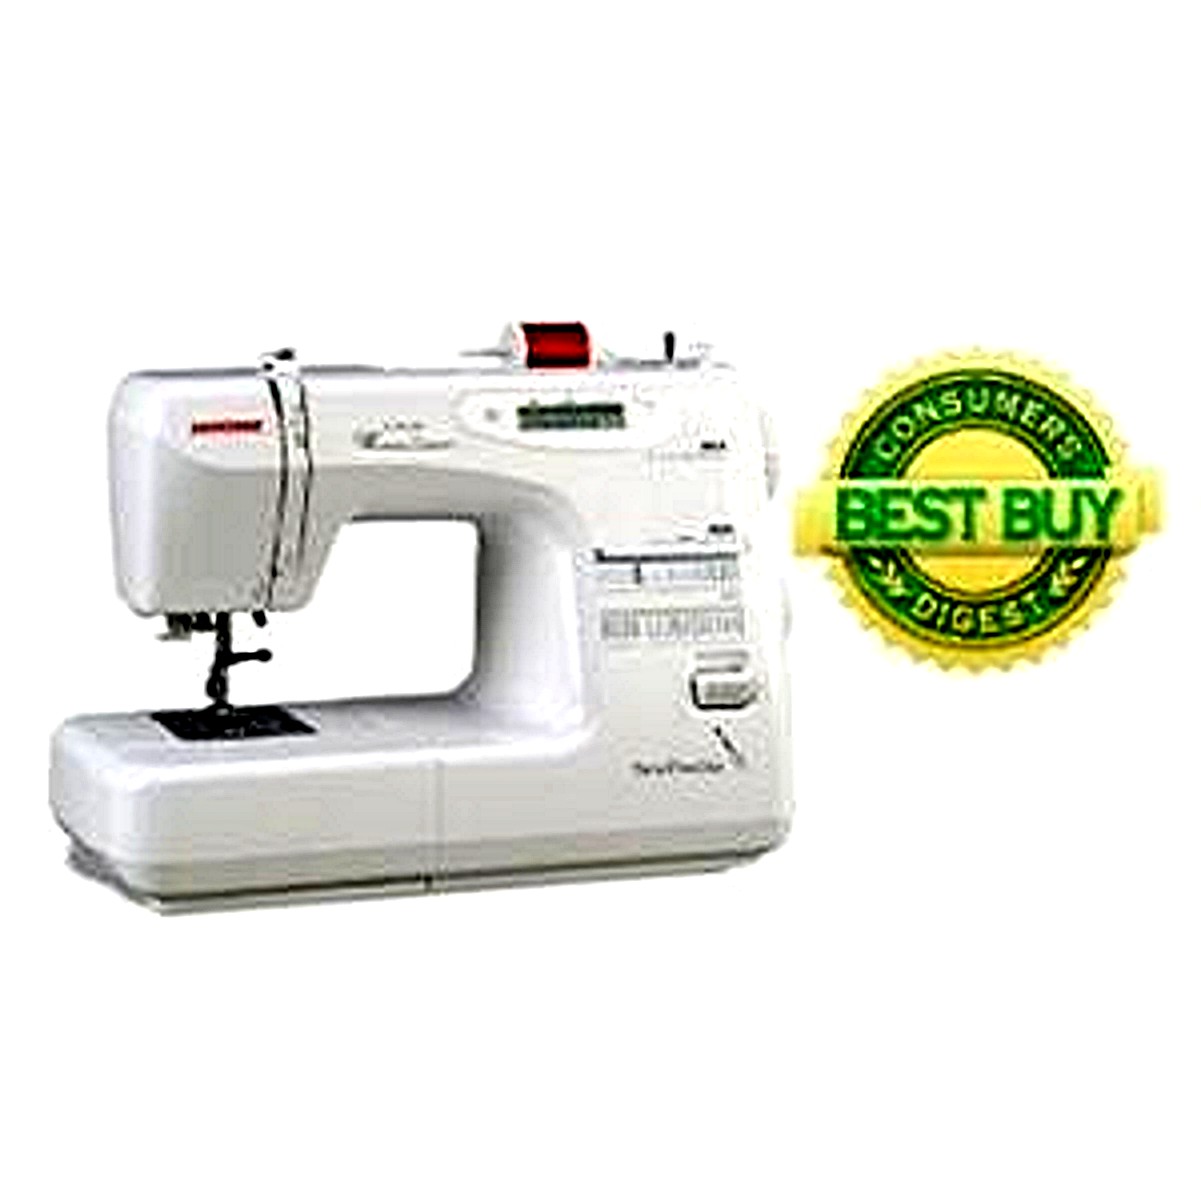 Janome Sharp Sewing Machine Needles - Select Size - Janome Sewing Centre  Everton Park